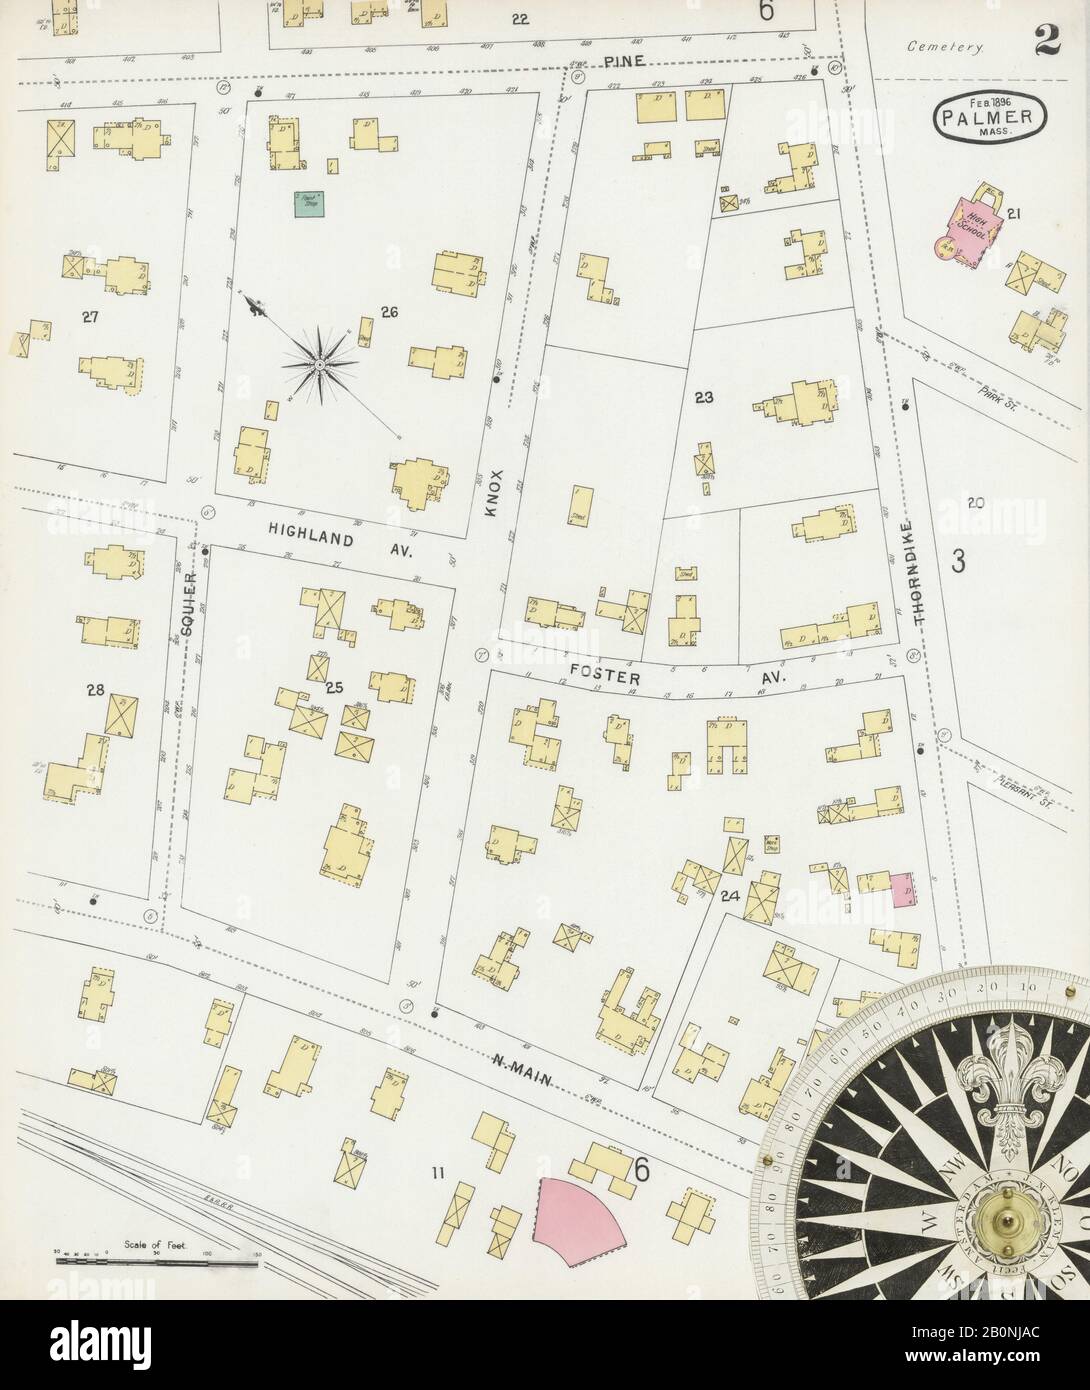 Bild 2 von Sanborn Fire Insurance Map aus Palmer, Hampden County, Massachusetts. Feb. 6 Blatt(e), Amerika, Straßenkarte mit einem Kompass Aus Dem 19. Jahrhundert Stockfoto